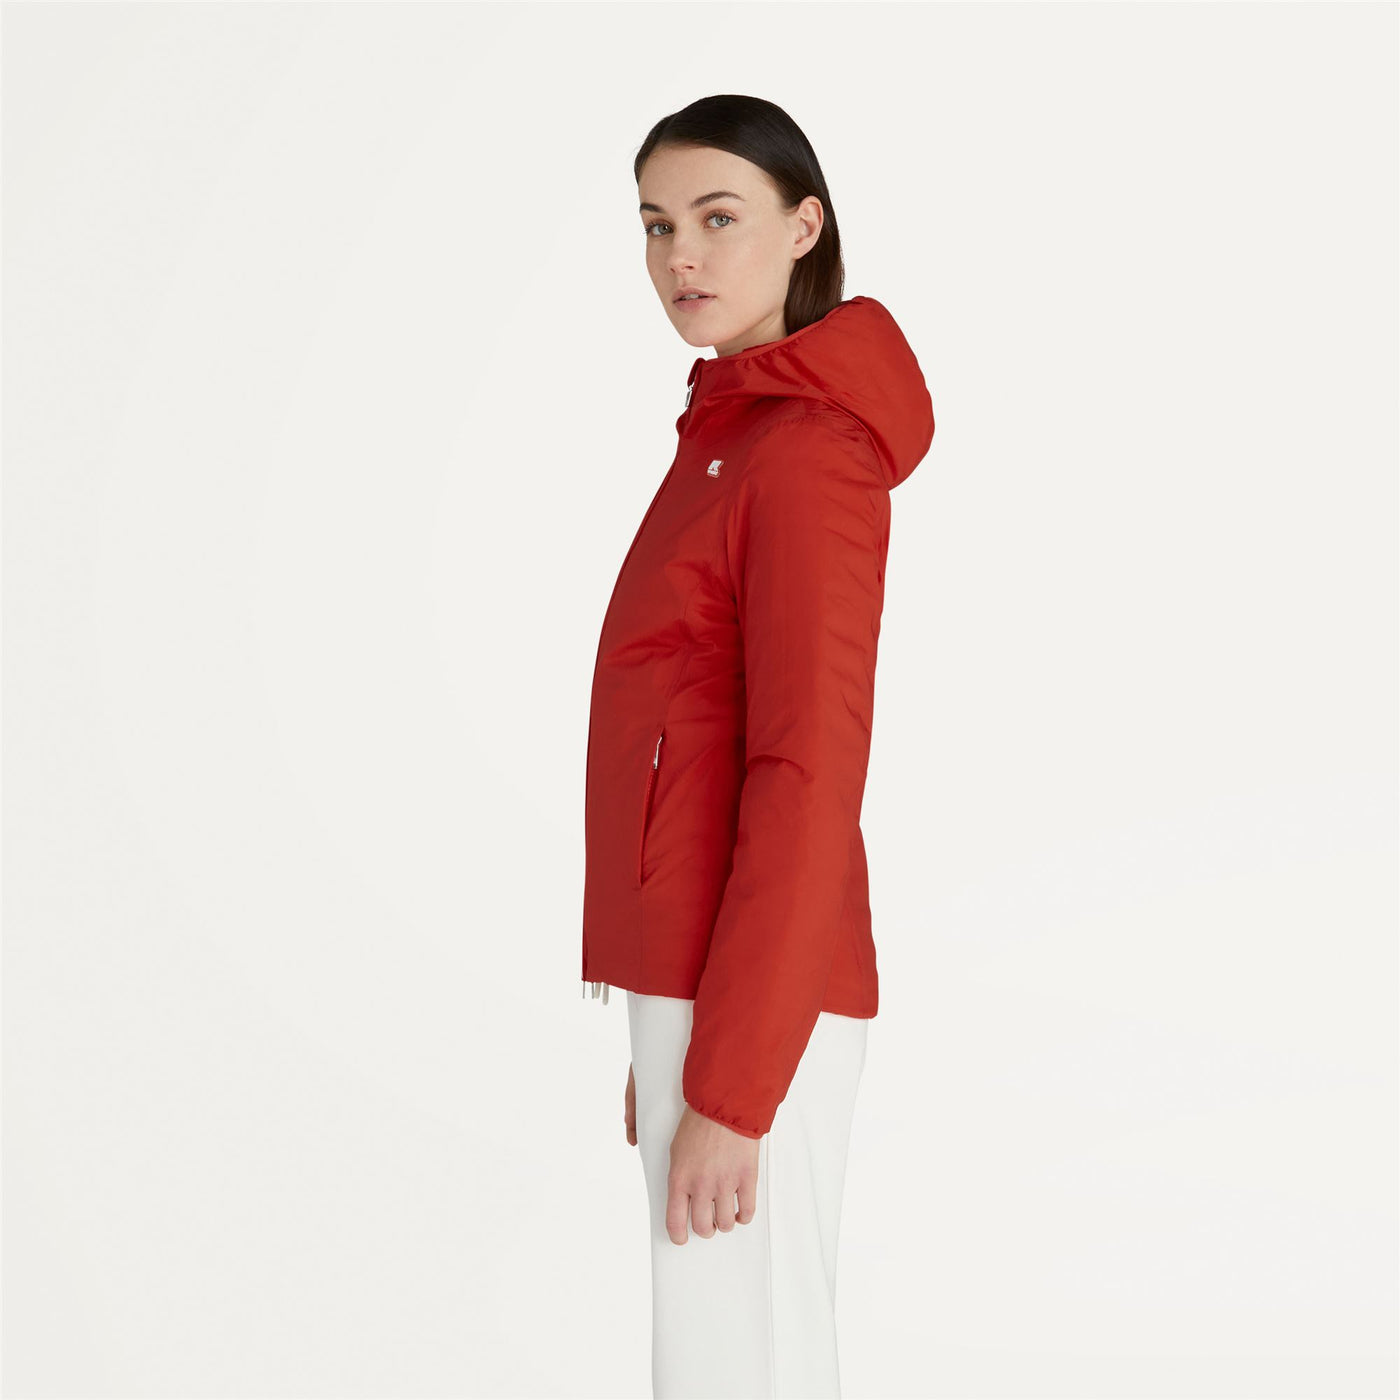 Jackets Woman LILY THERMO LIGHT DOUBLE Short ORANGE REDDISH Detail (jpg Rgb)			